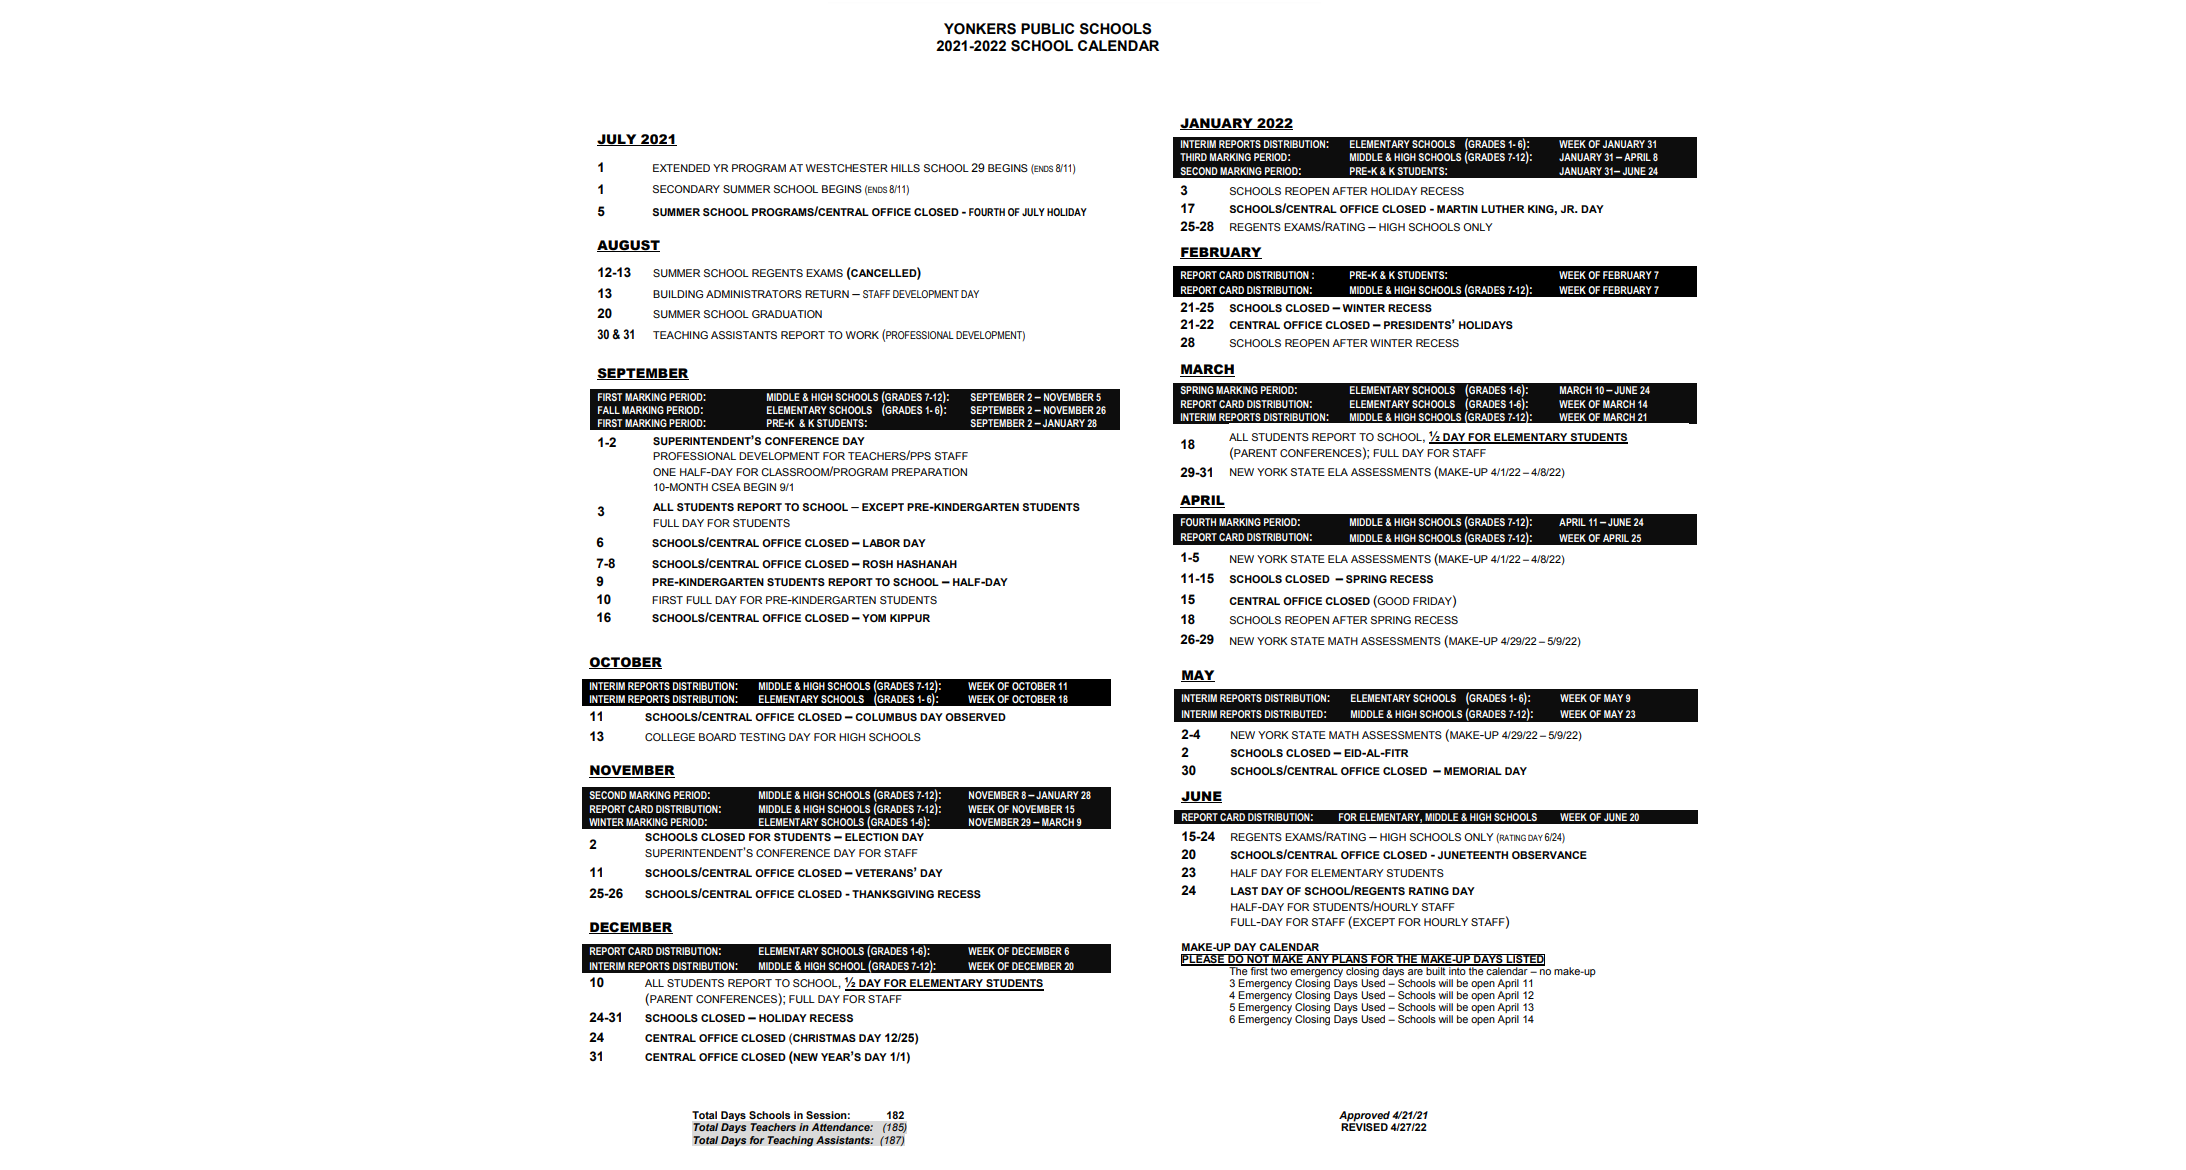 District School Academic Calendar Key for Montessori School 27